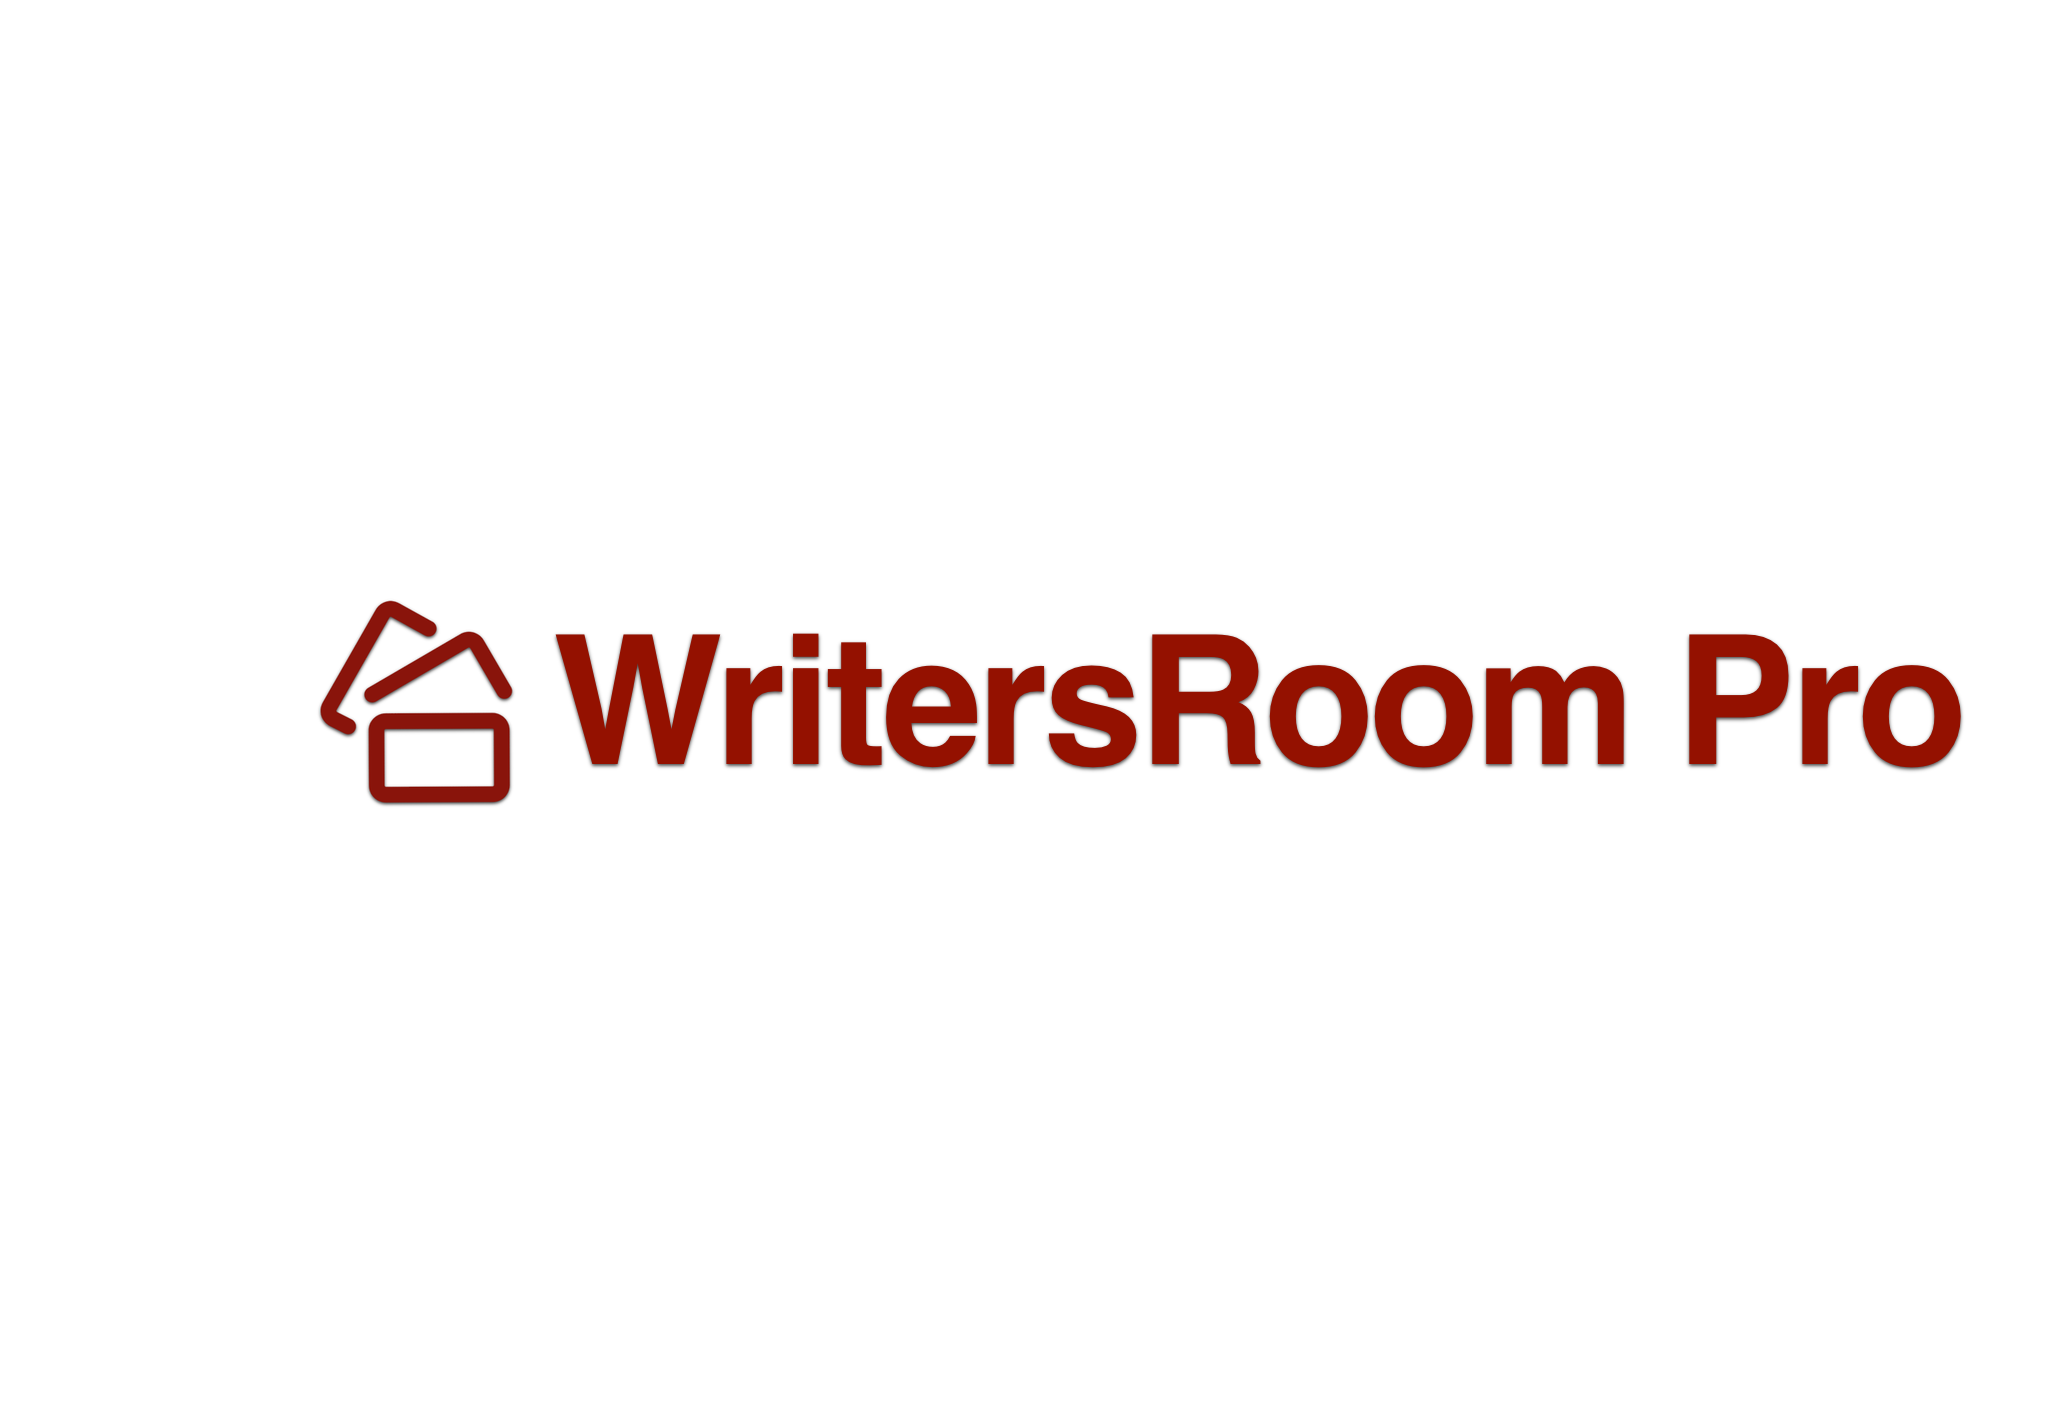 WritersRoom Pro logo